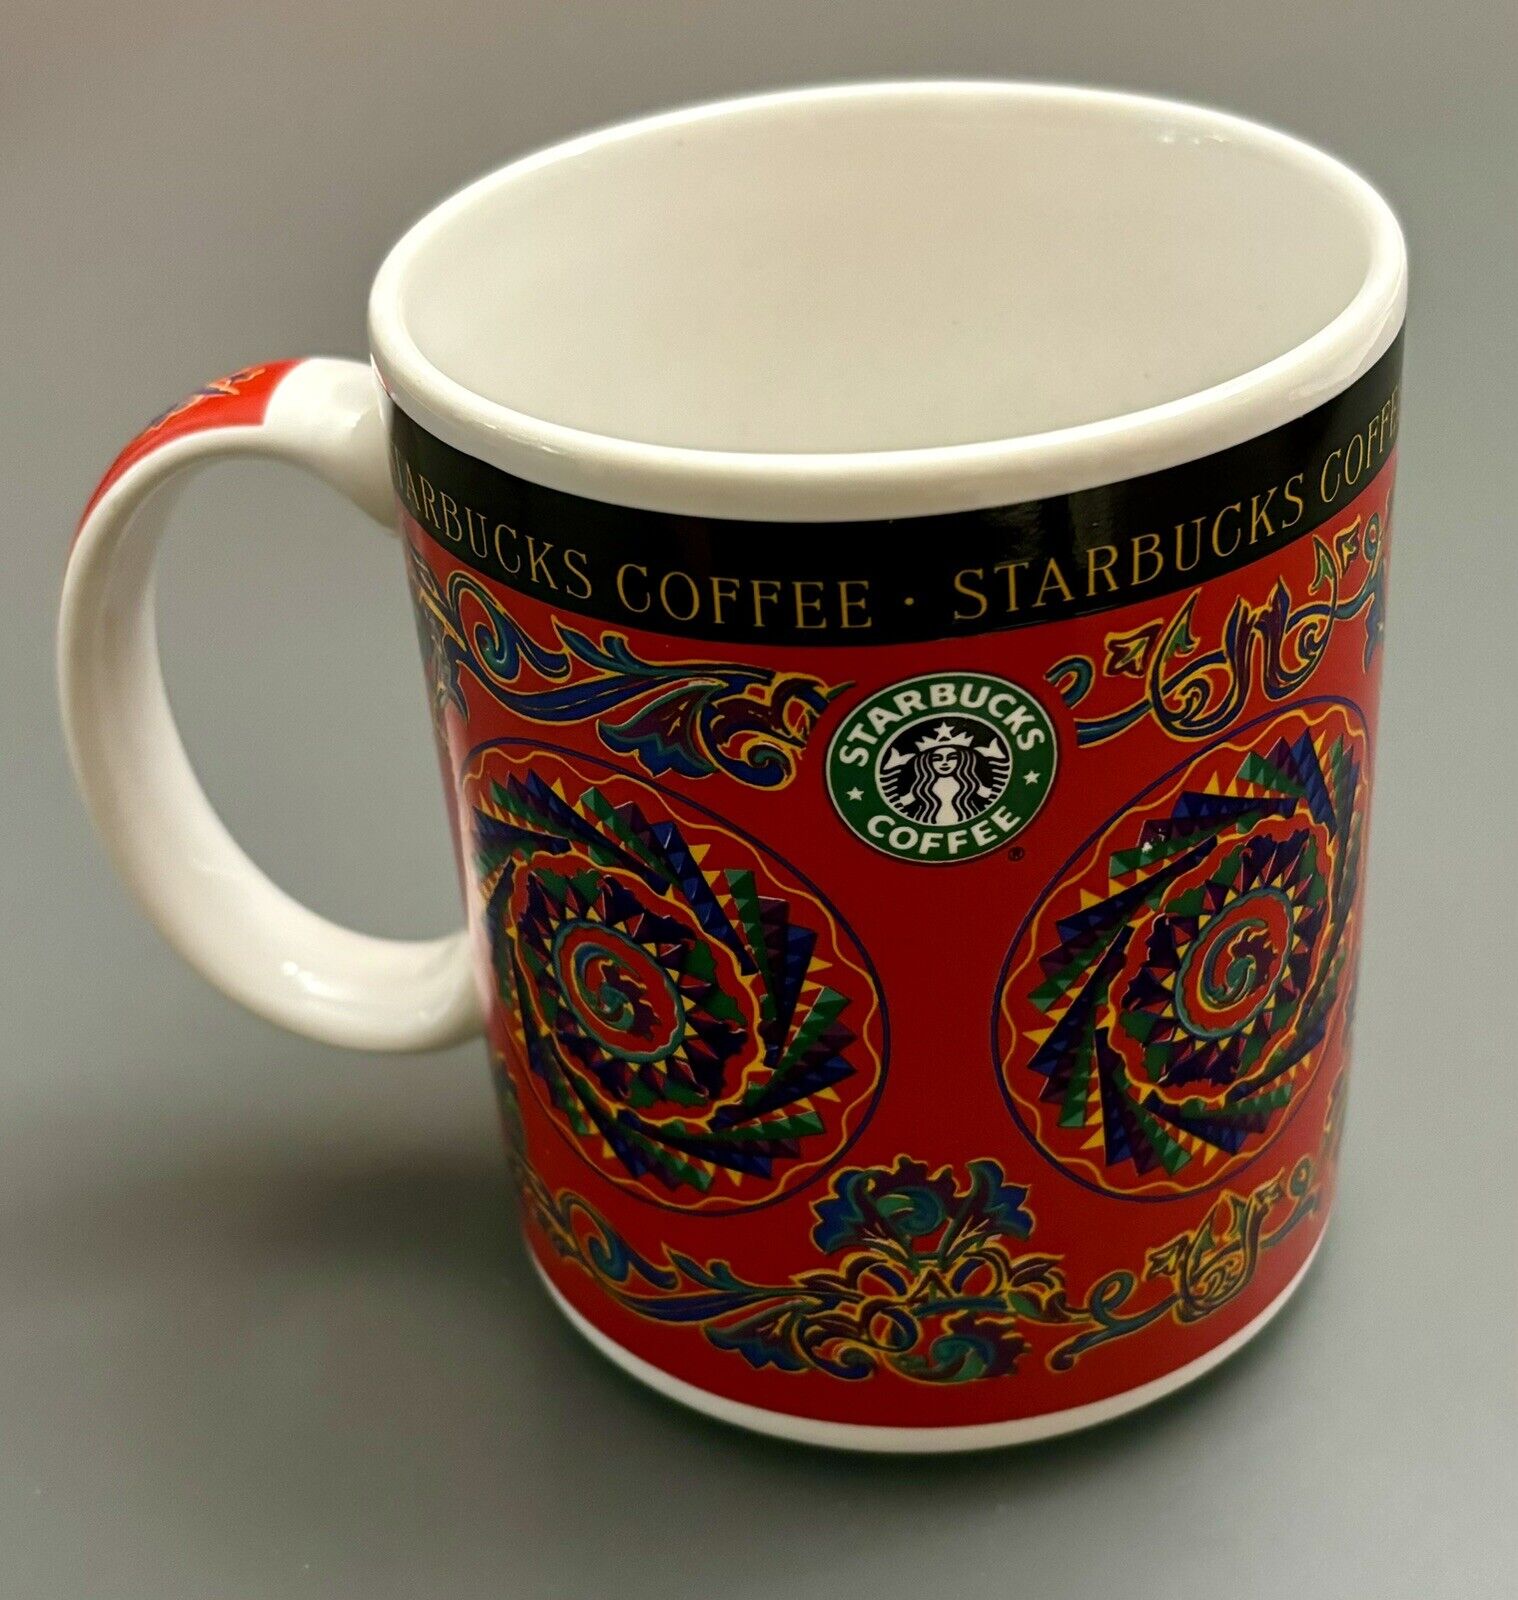 VNTG 1996 Starbucks Mug Floral Paisley Ethnic Design Red Made in Thailand Rare